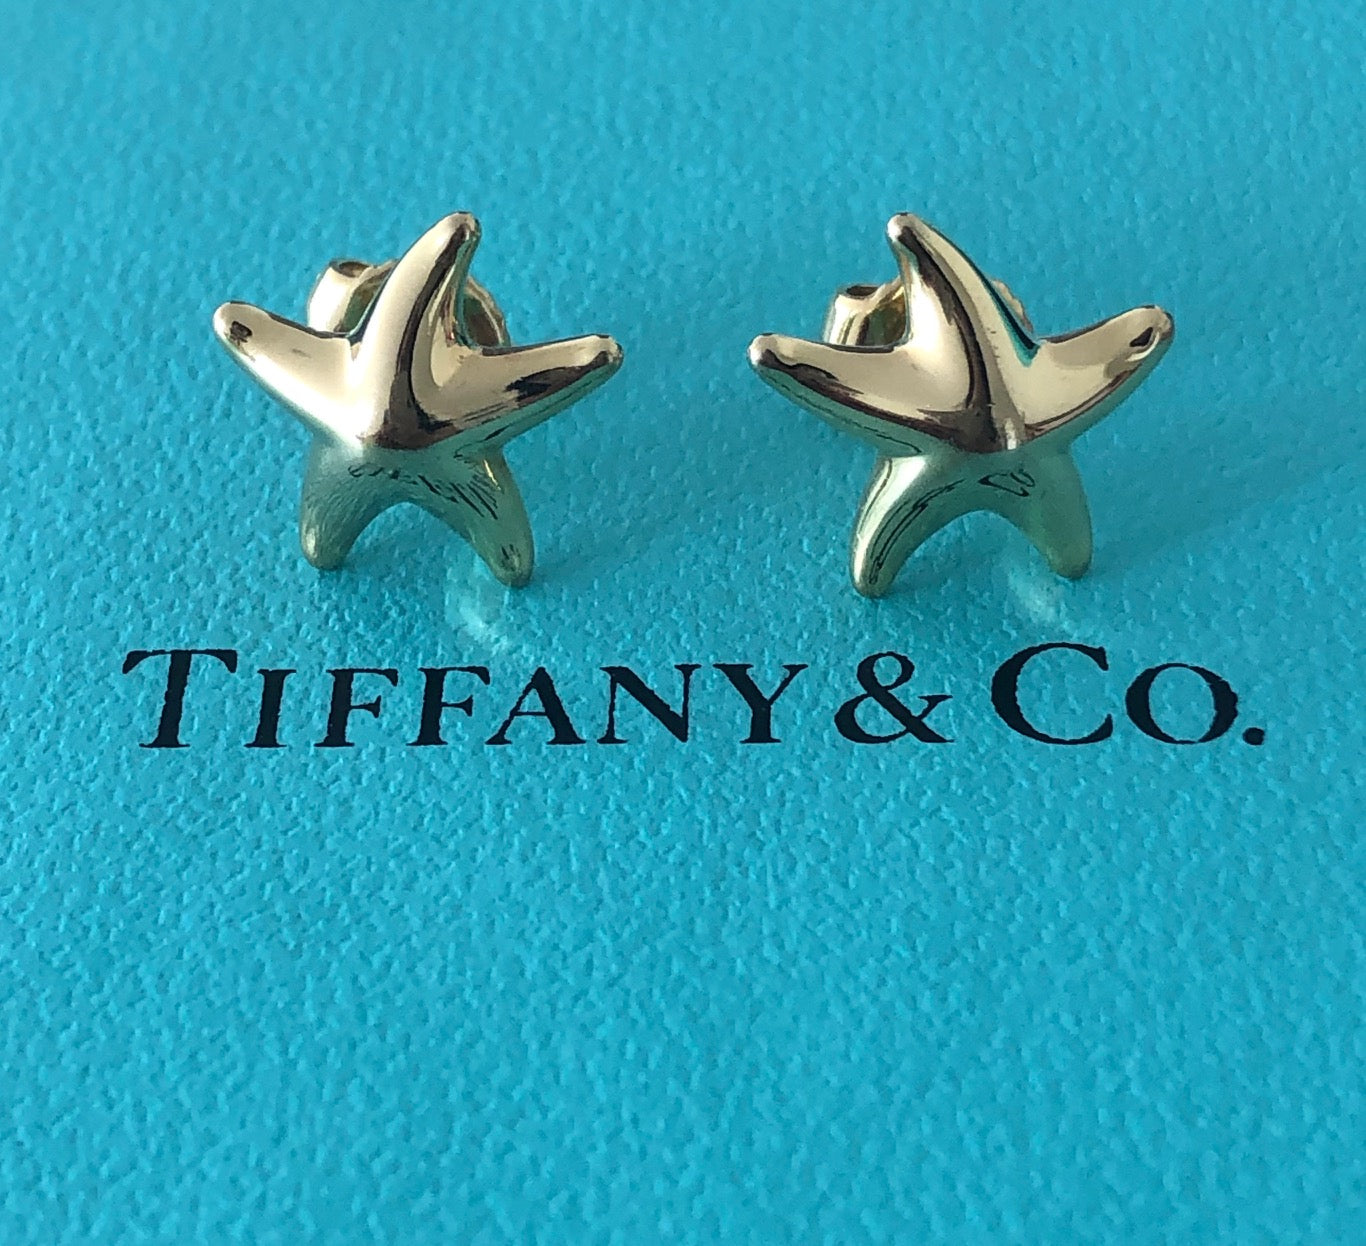 Tiffany & Co. 18ct Solid Yellow Gold Elsa Peretti Star Fish Earrings